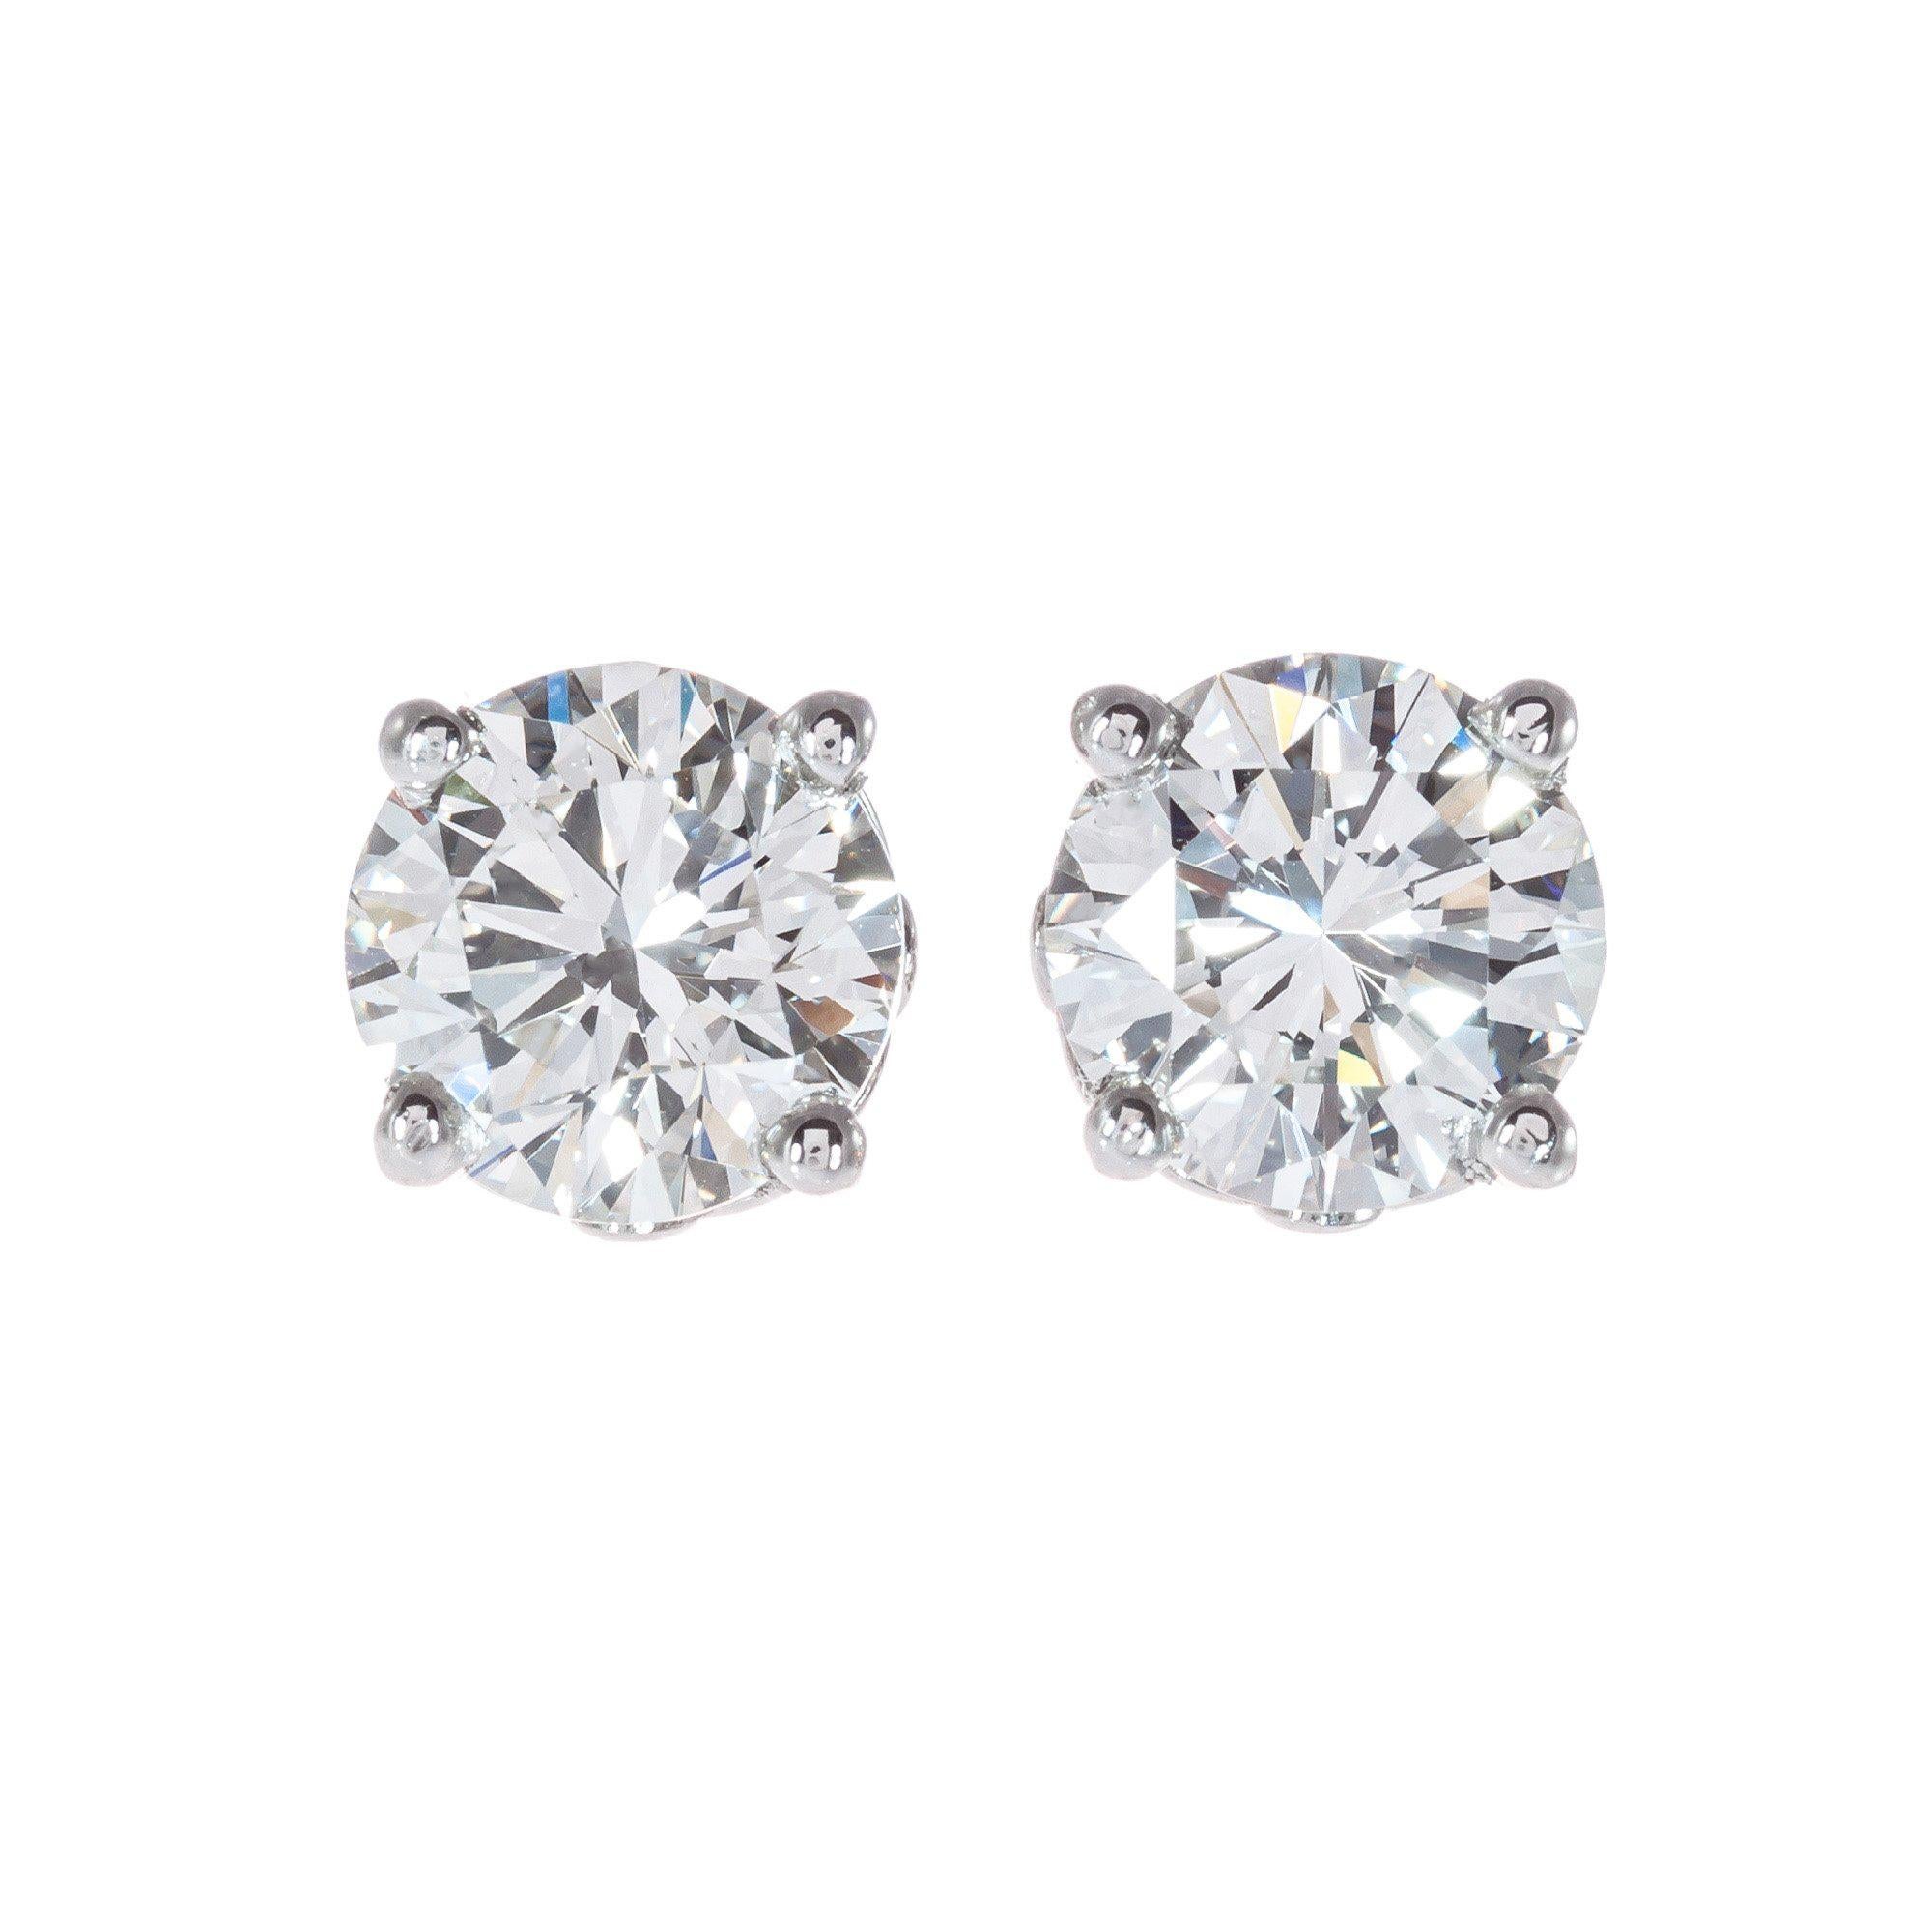 Peter Suchy GIA Certified 1.64 Carat Diamond Platinum Stud Earrings